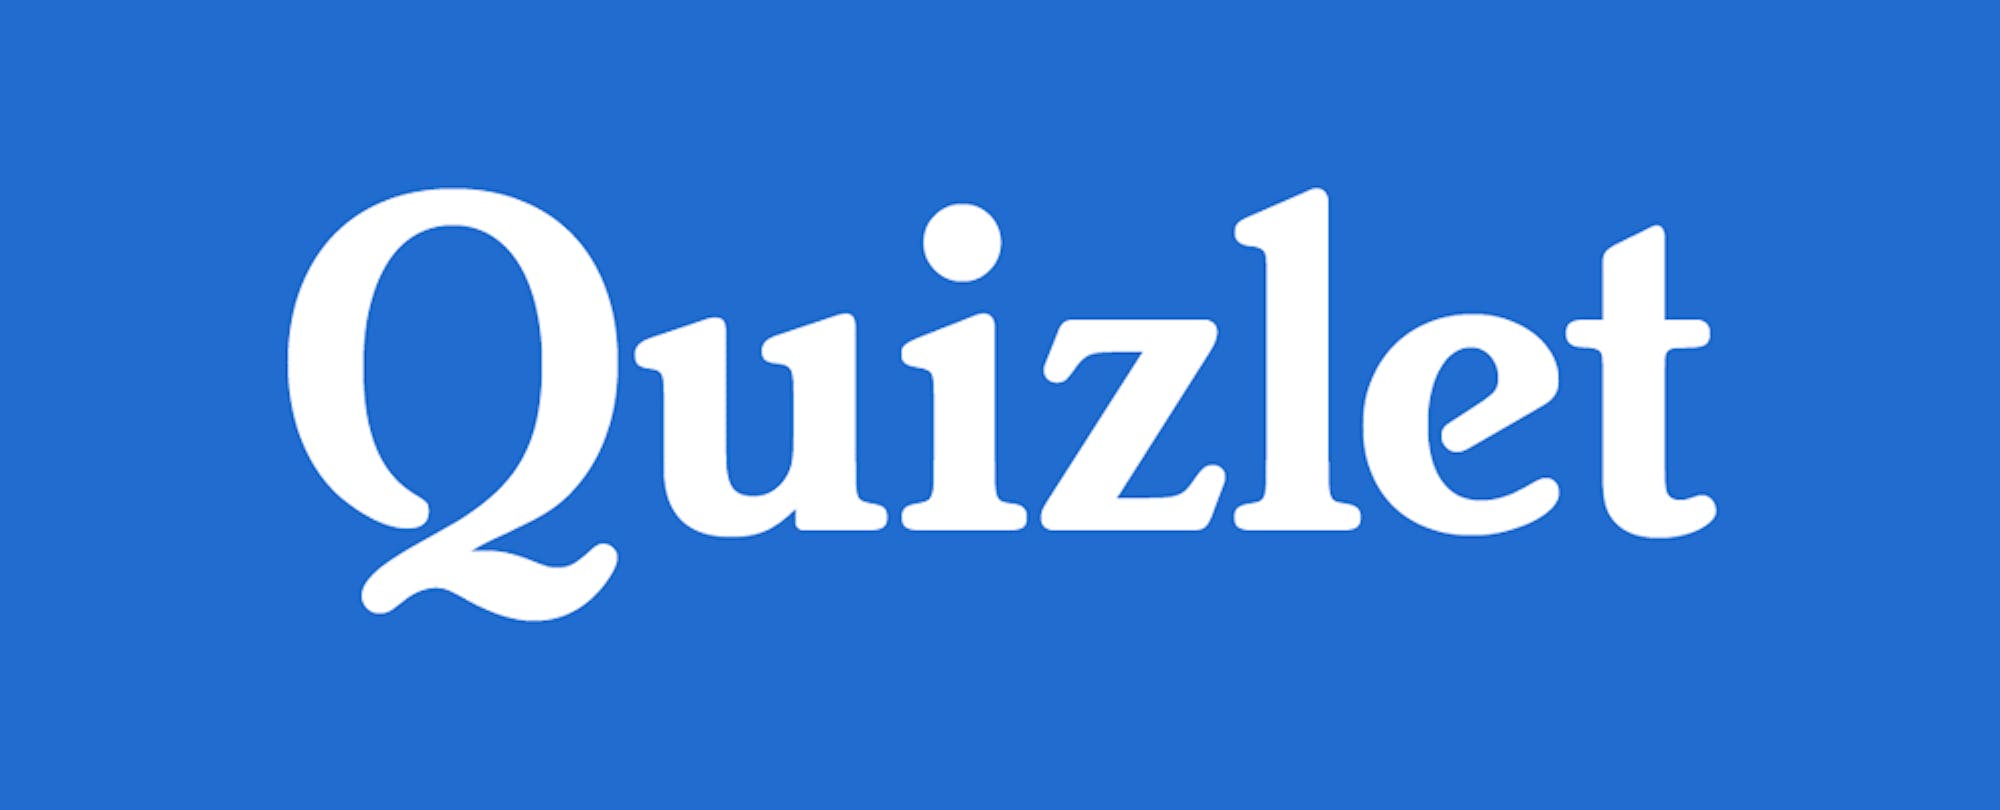 Image result for quizlet logo